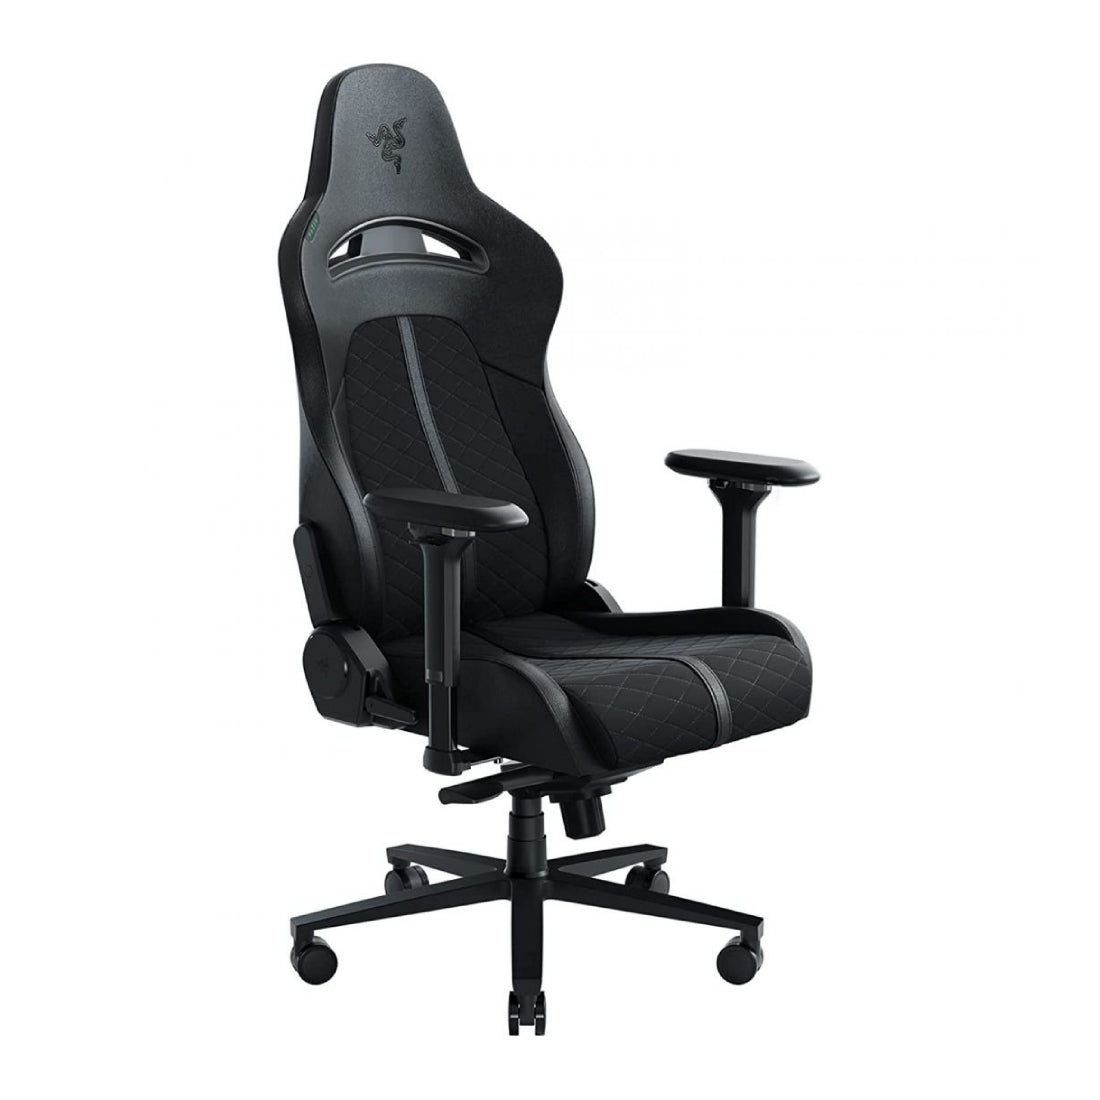 Razer Enki Gaming Chair - Black - Store 974 | ستور ٩٧٤